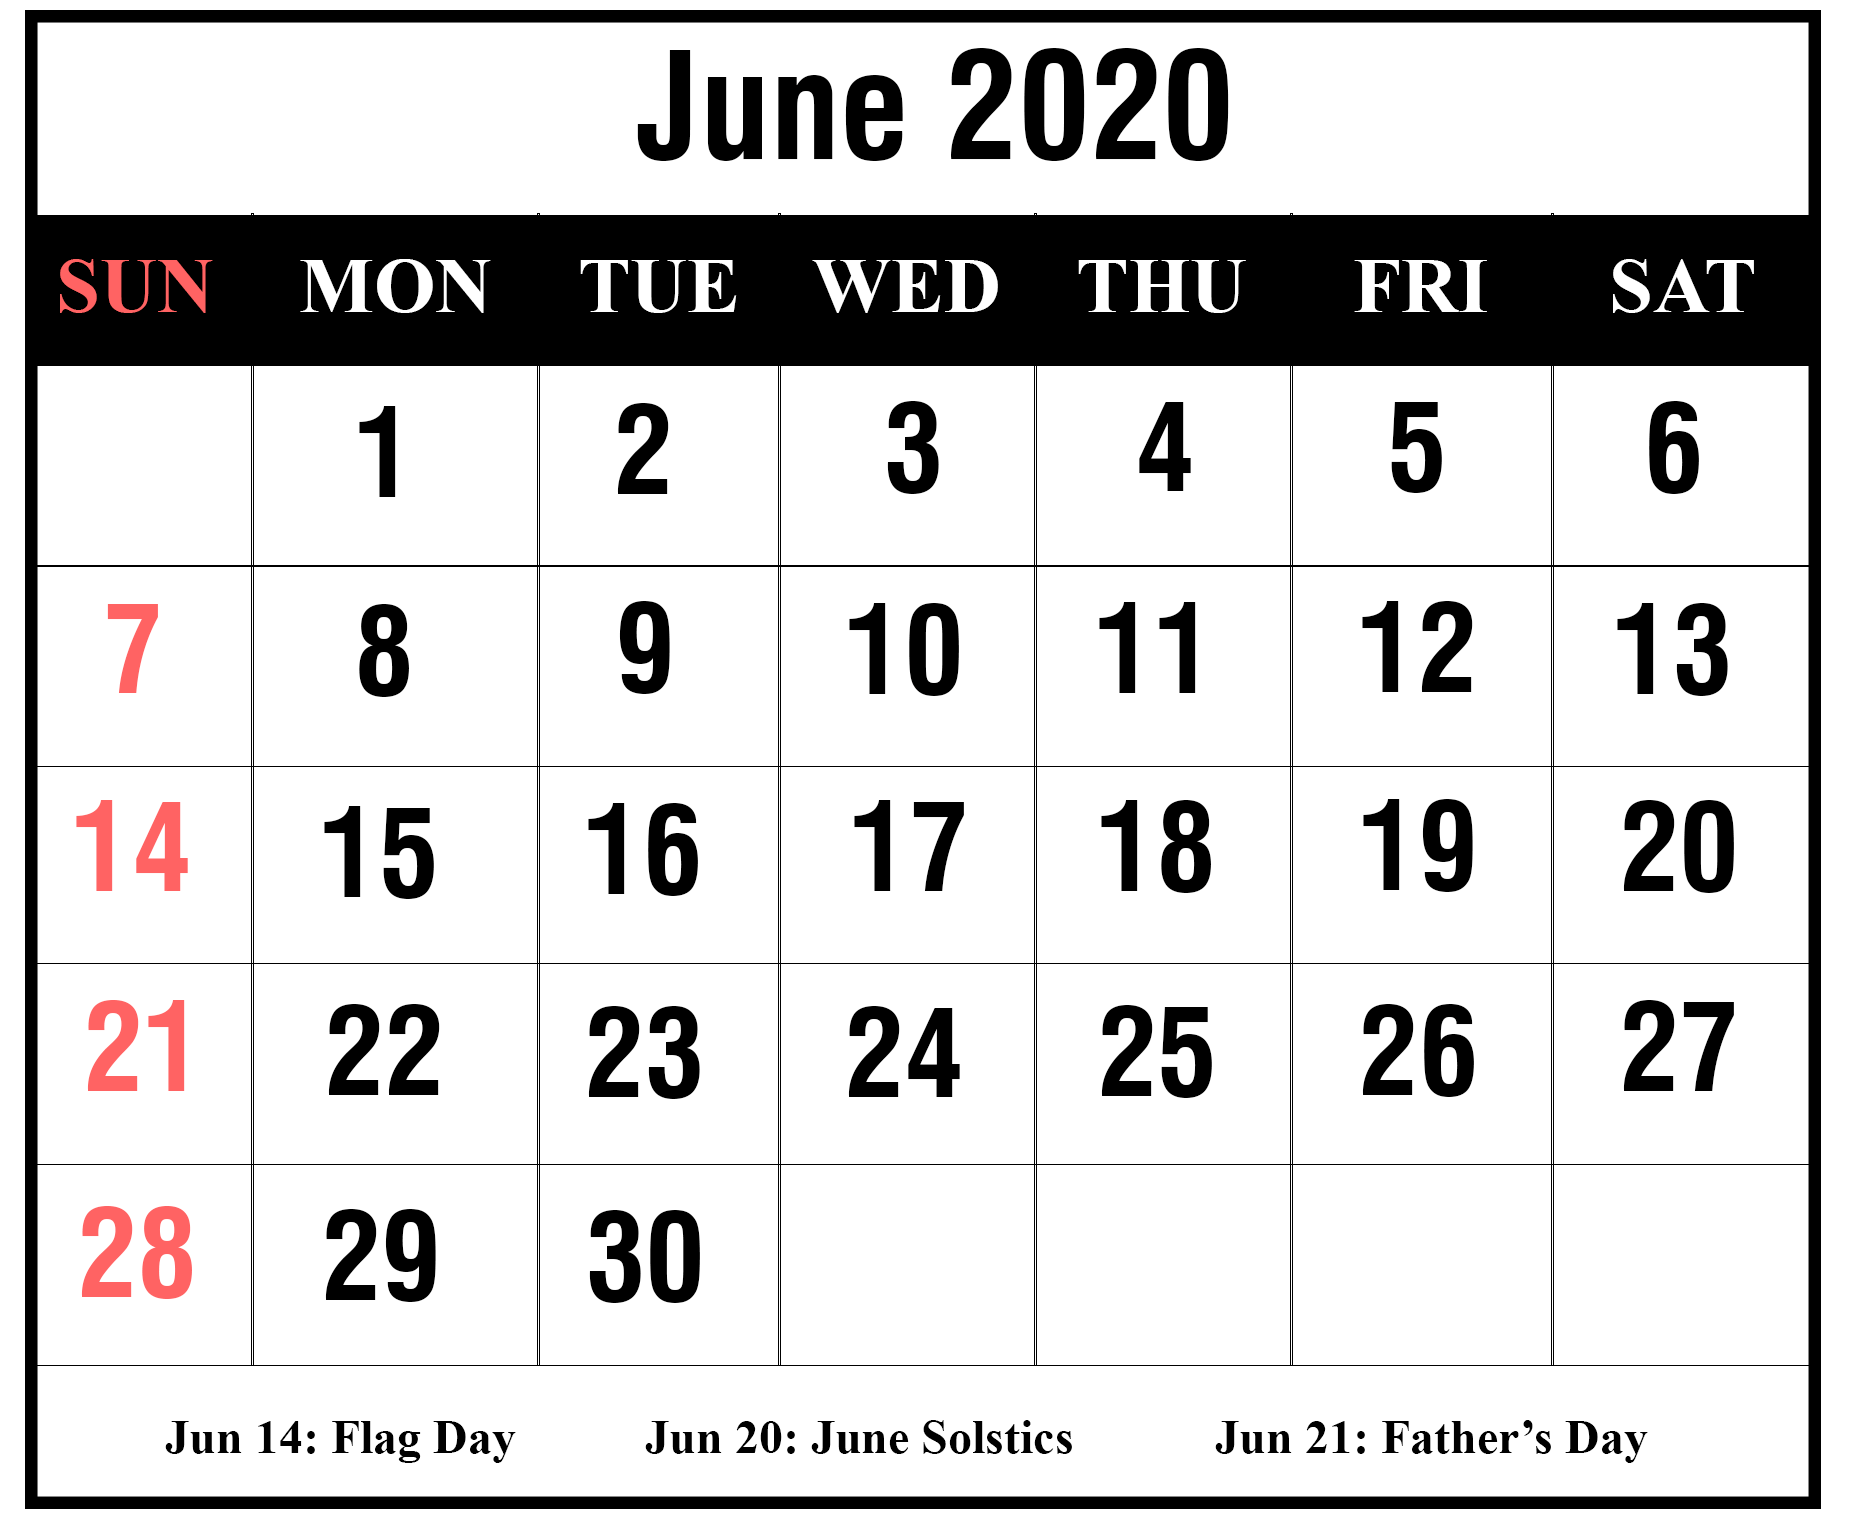 June 2020 Calendar Wallpaper Free June 2020 Calendar